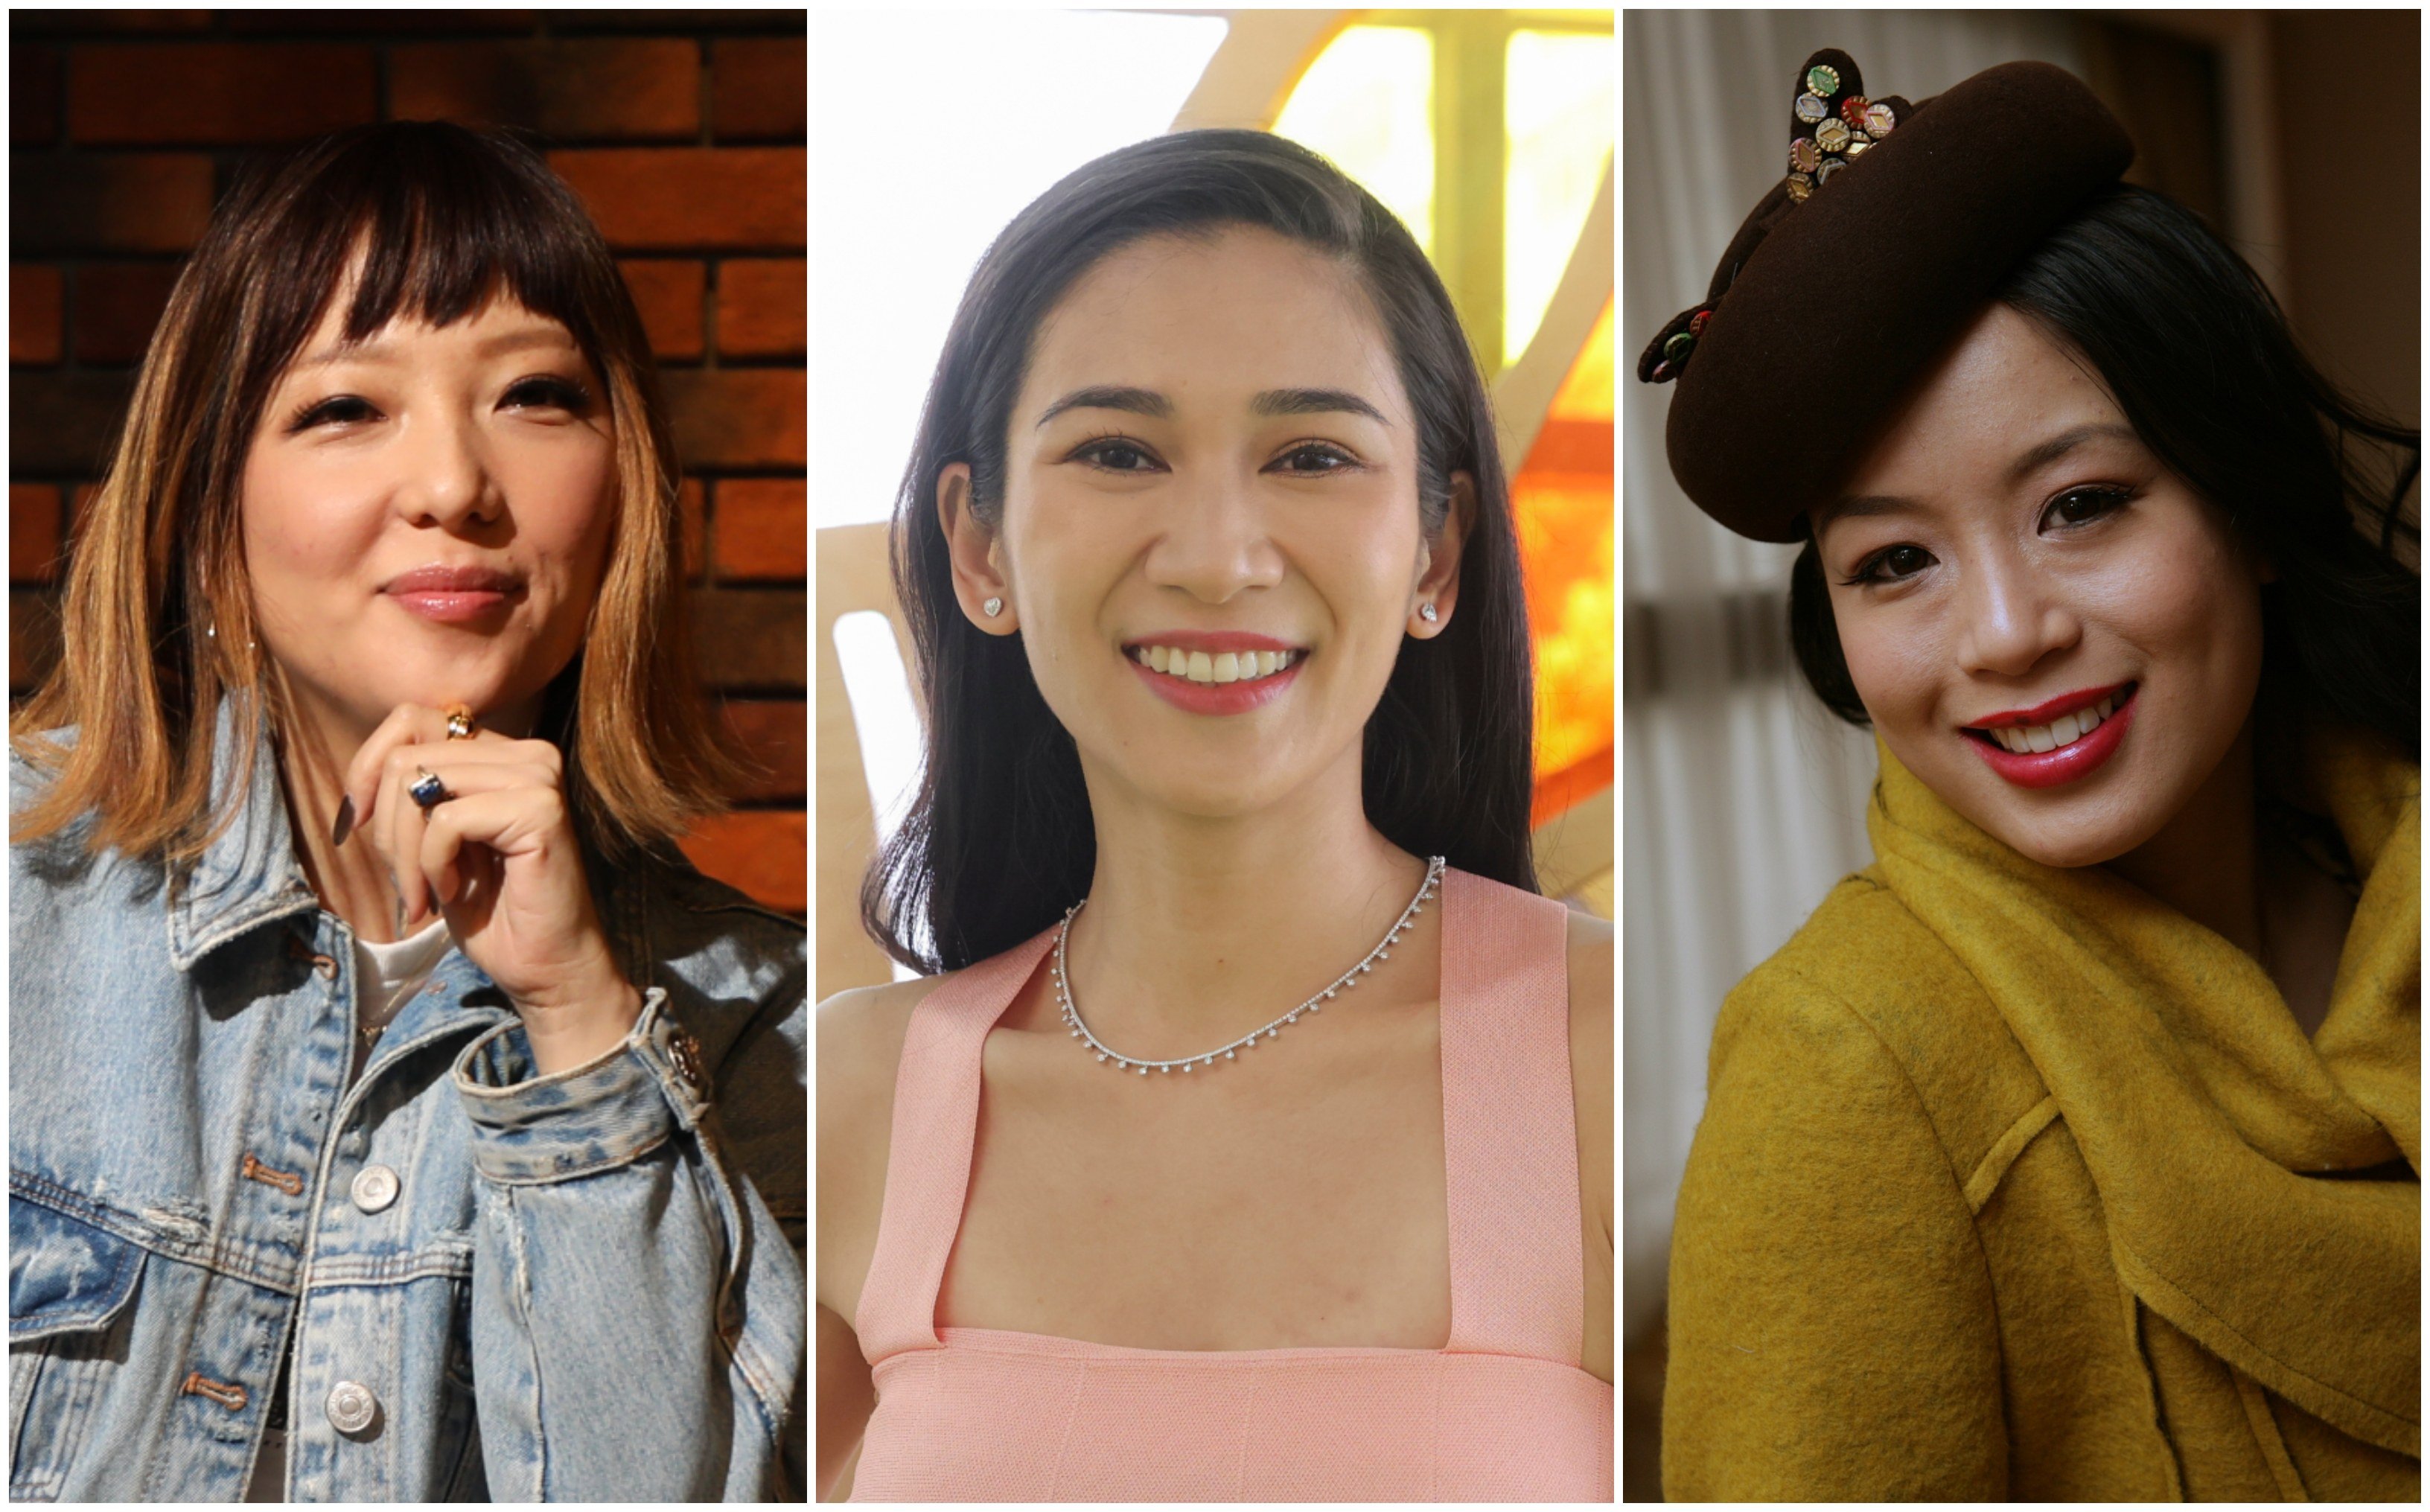 Jill Vidal, Crisel Consunji and T.V. Carpio are all famous Hongkongers with Filipino roots. Photos: SCMP